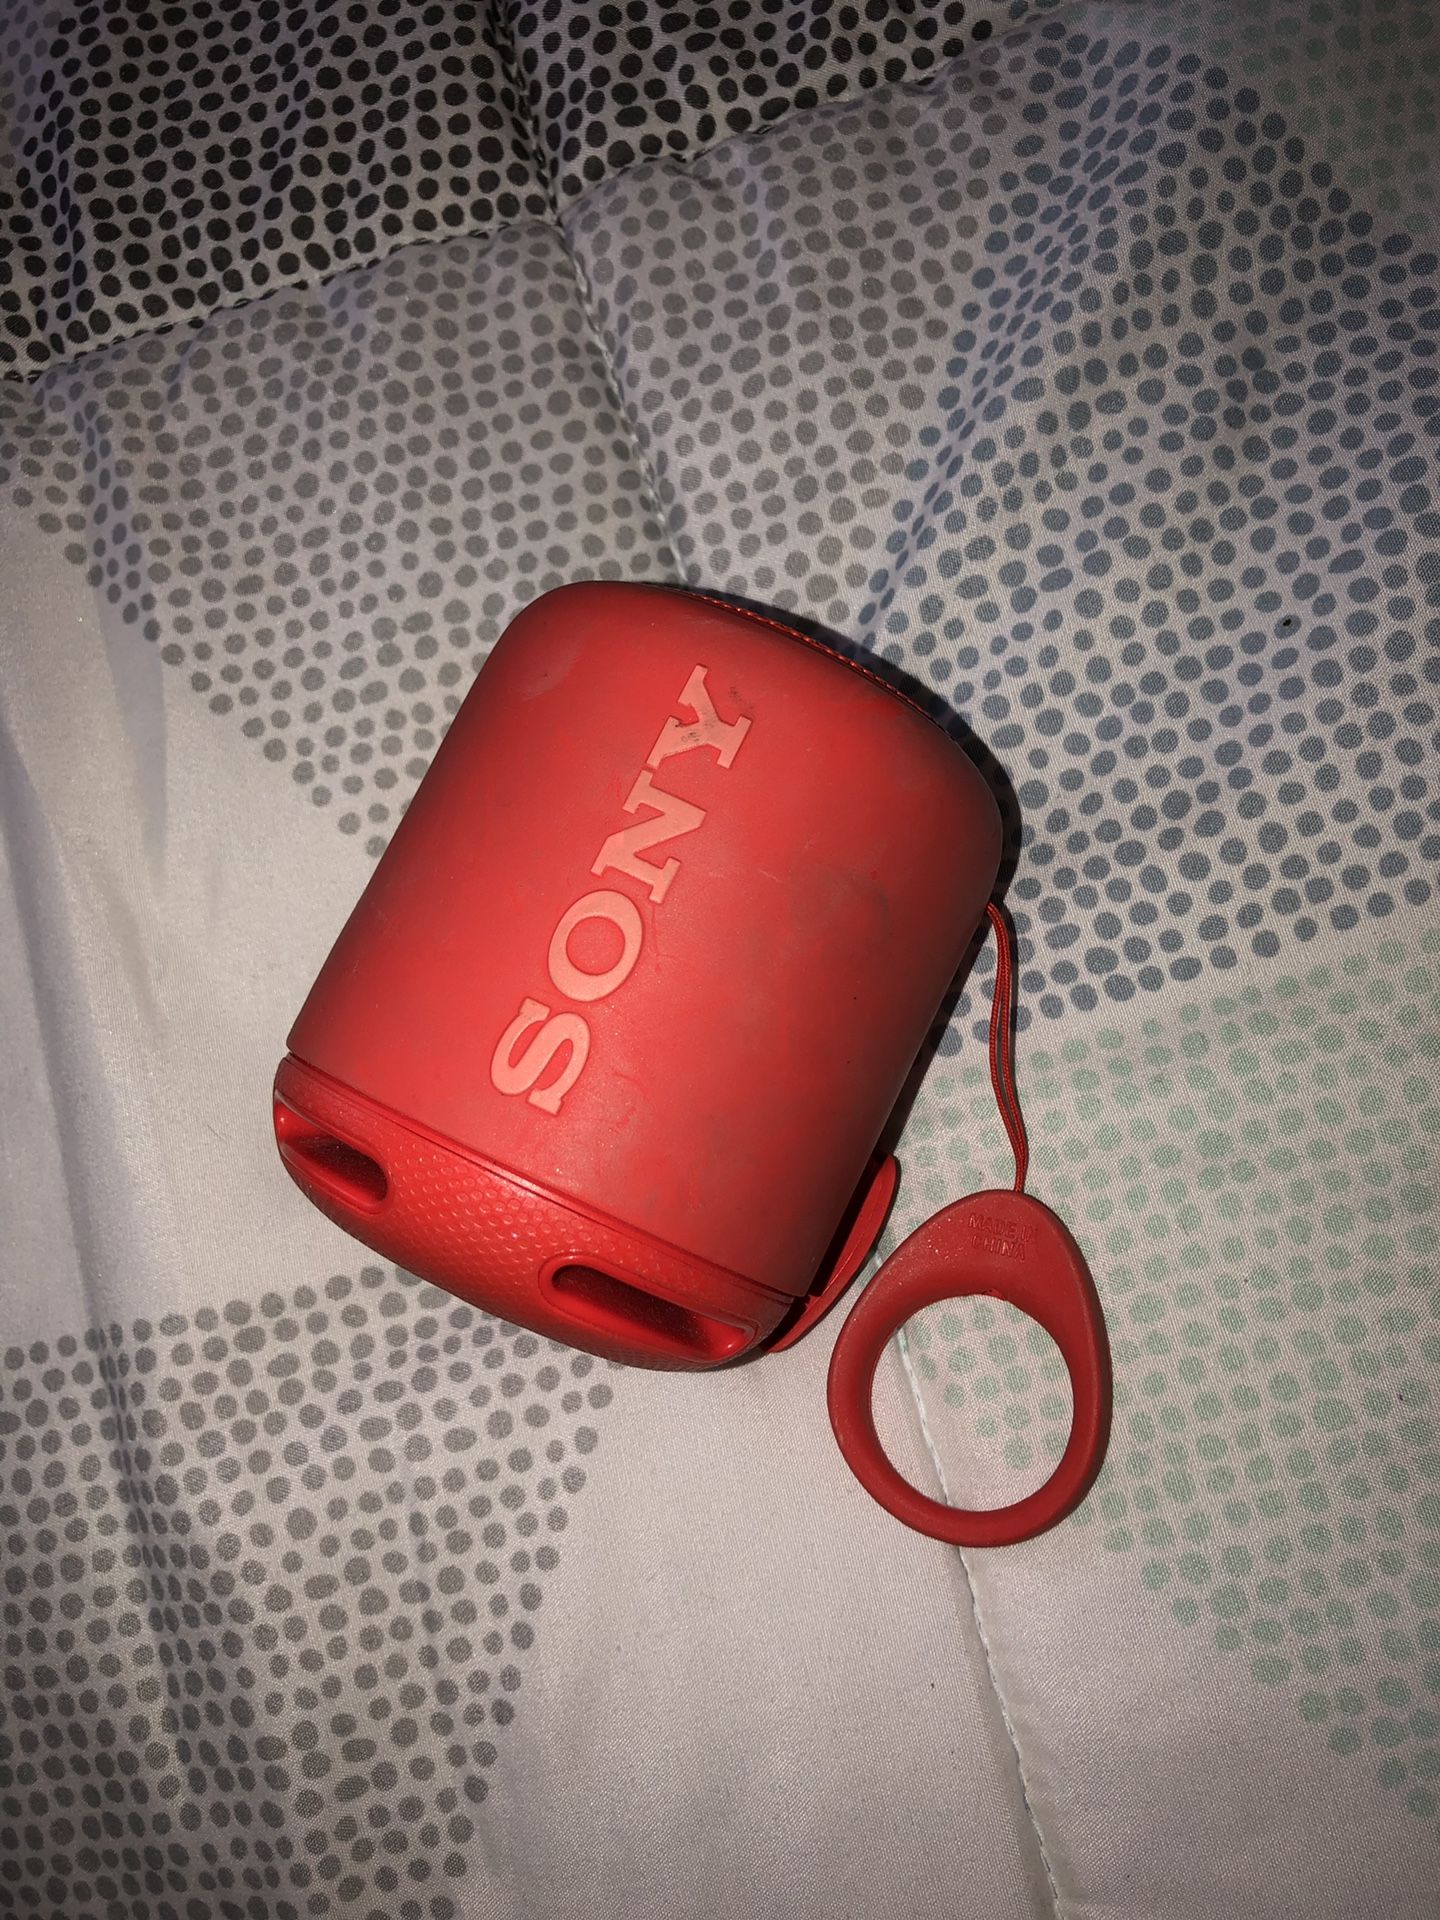 Sony BlueTooth Speaker